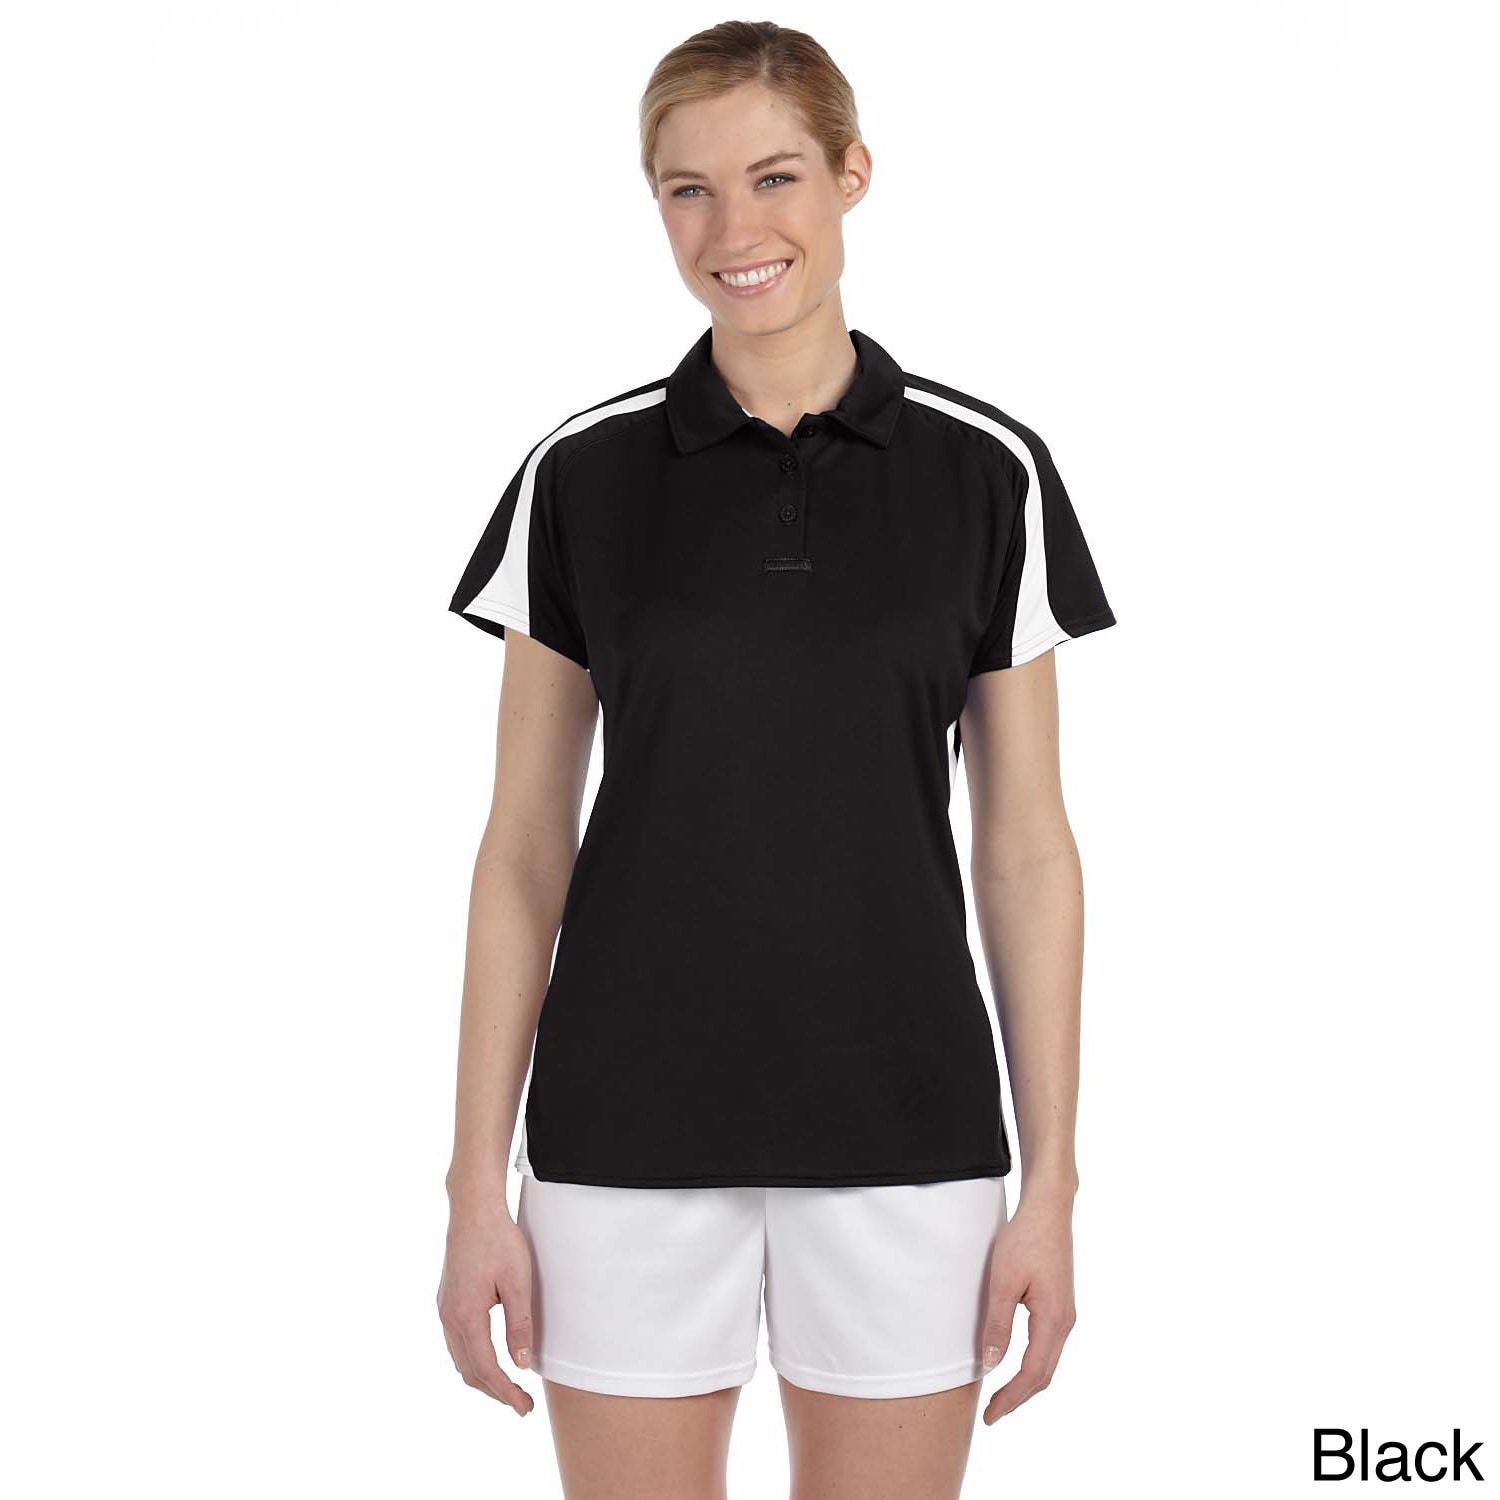 athletic polo shirts womens